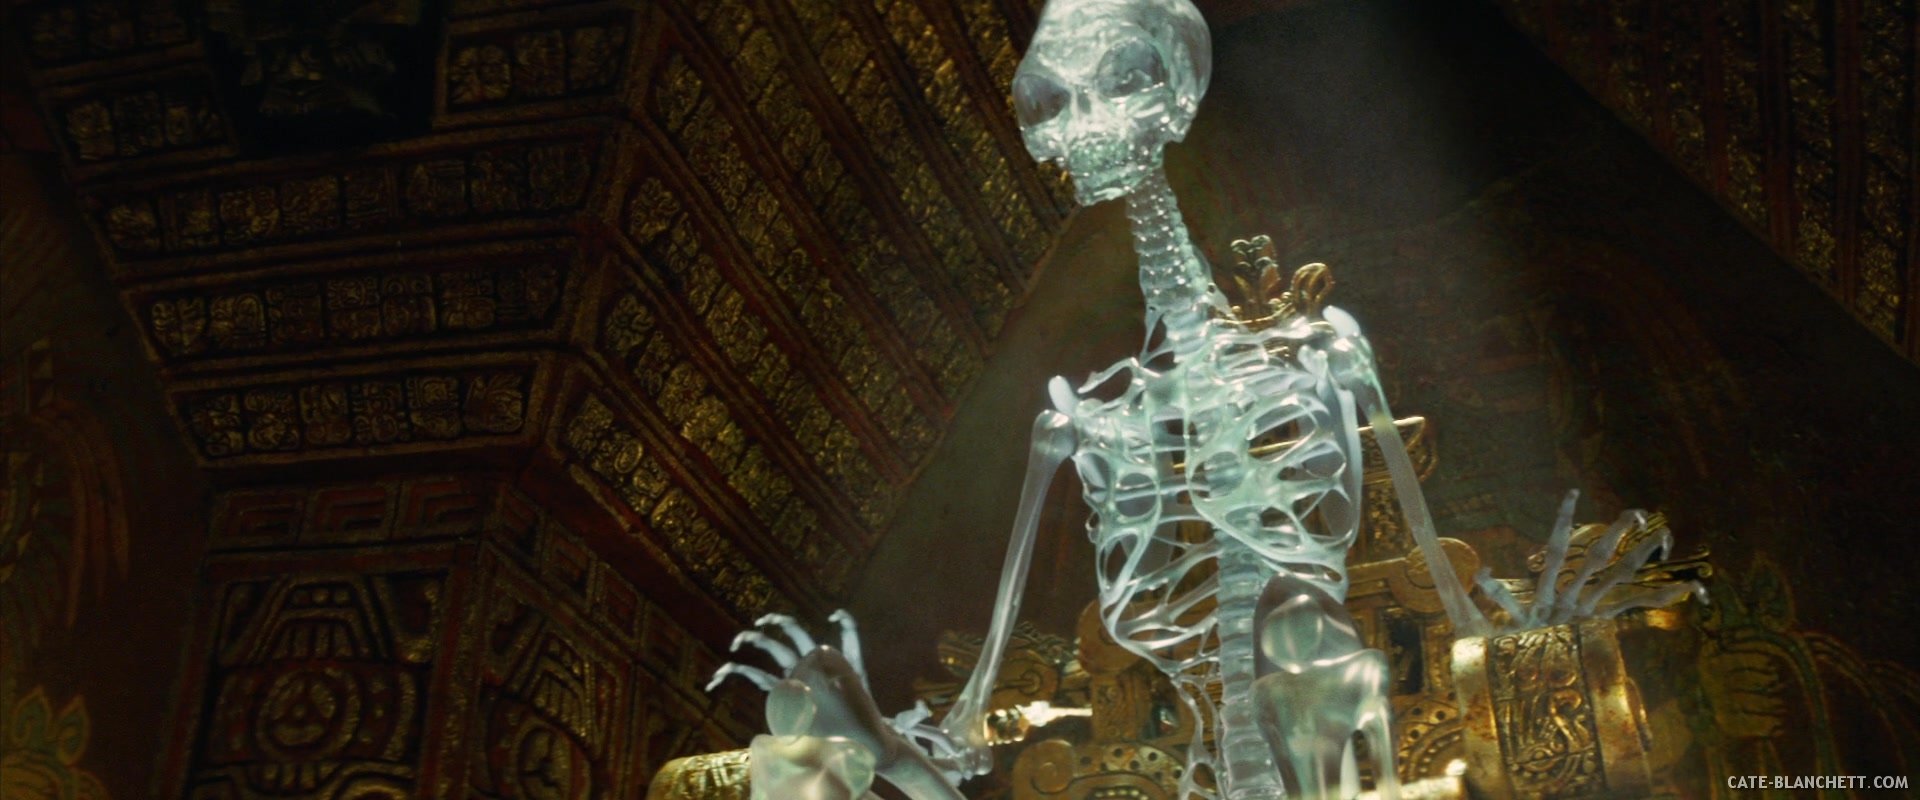 Indiana-Jones-And-The-Kingdom-Of-The-Crystal-Skull-650.jpg